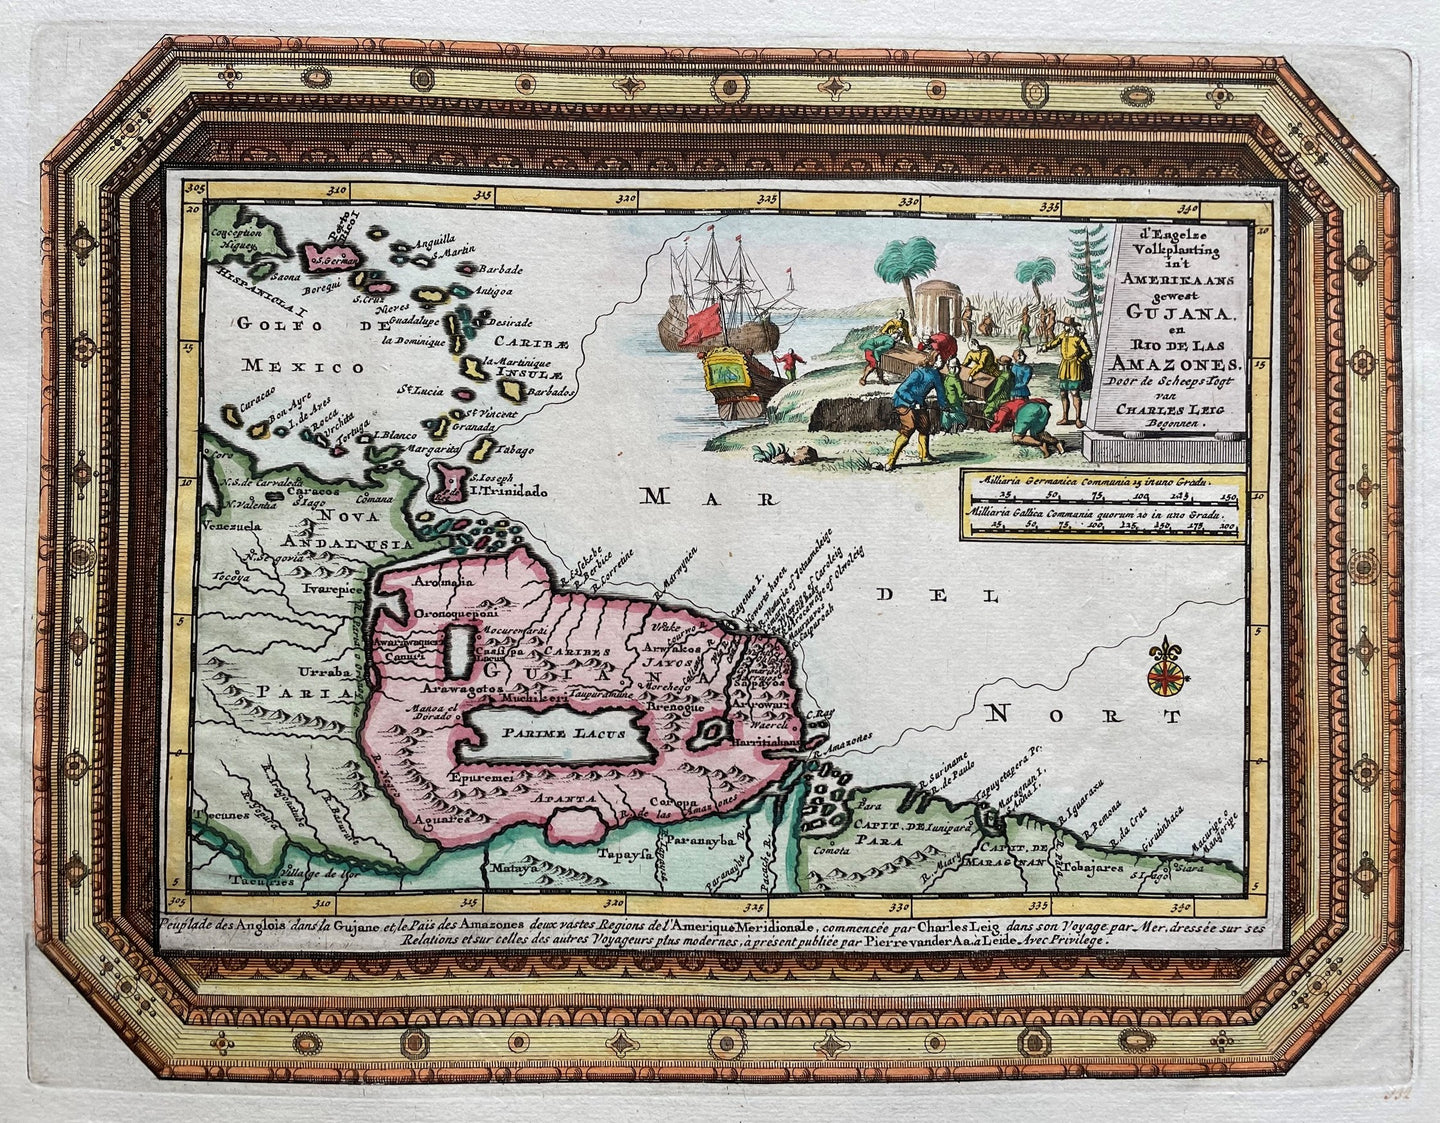 Guyana's Kleine Antillen - Pieter van der Aa - circa 1714